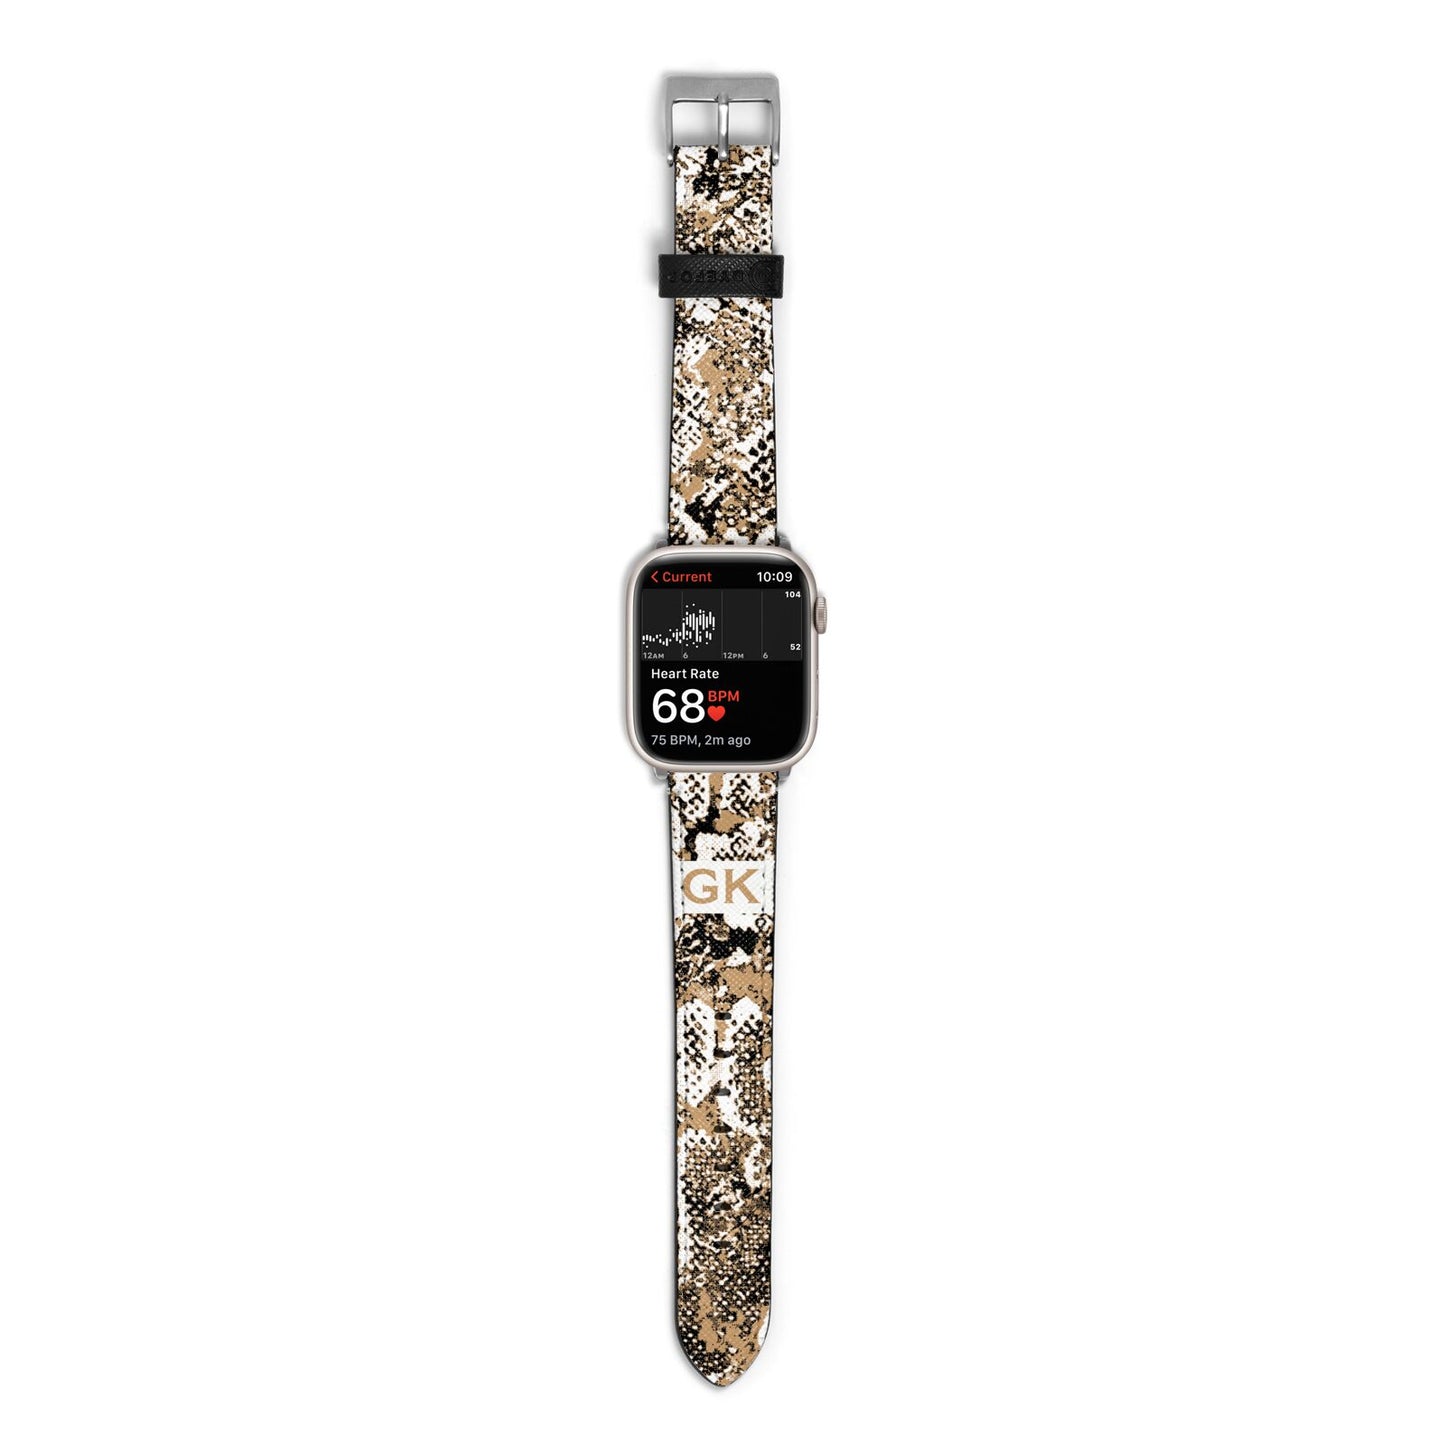 Custom Tan Snakeskin Apple Watch Strap Size 38mm with Silver Hardware